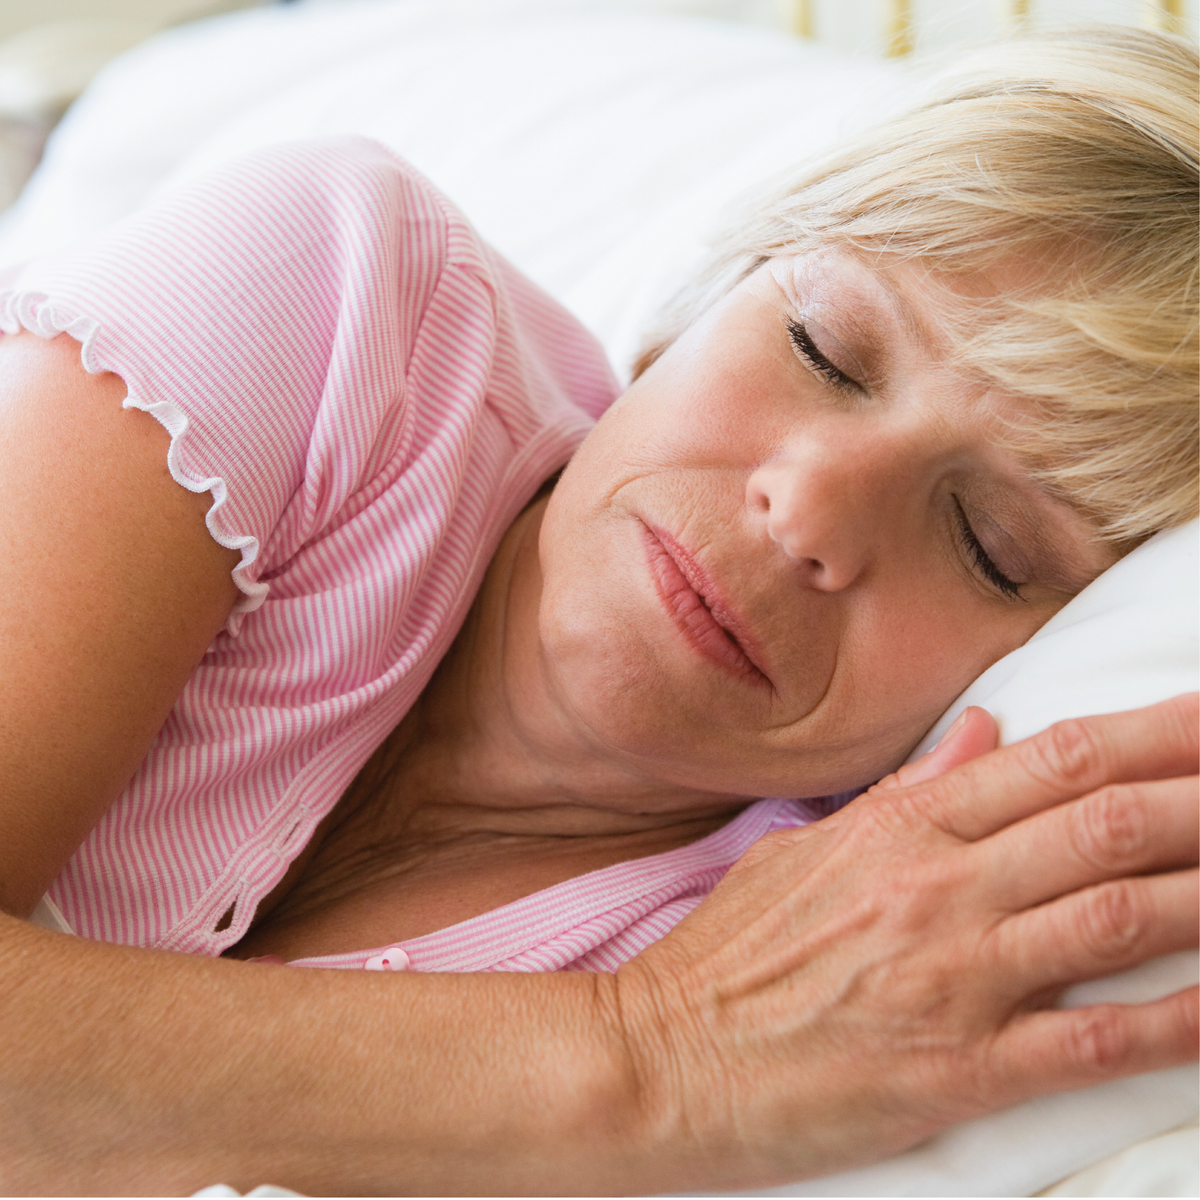 Get a good night's sleep for arthritis